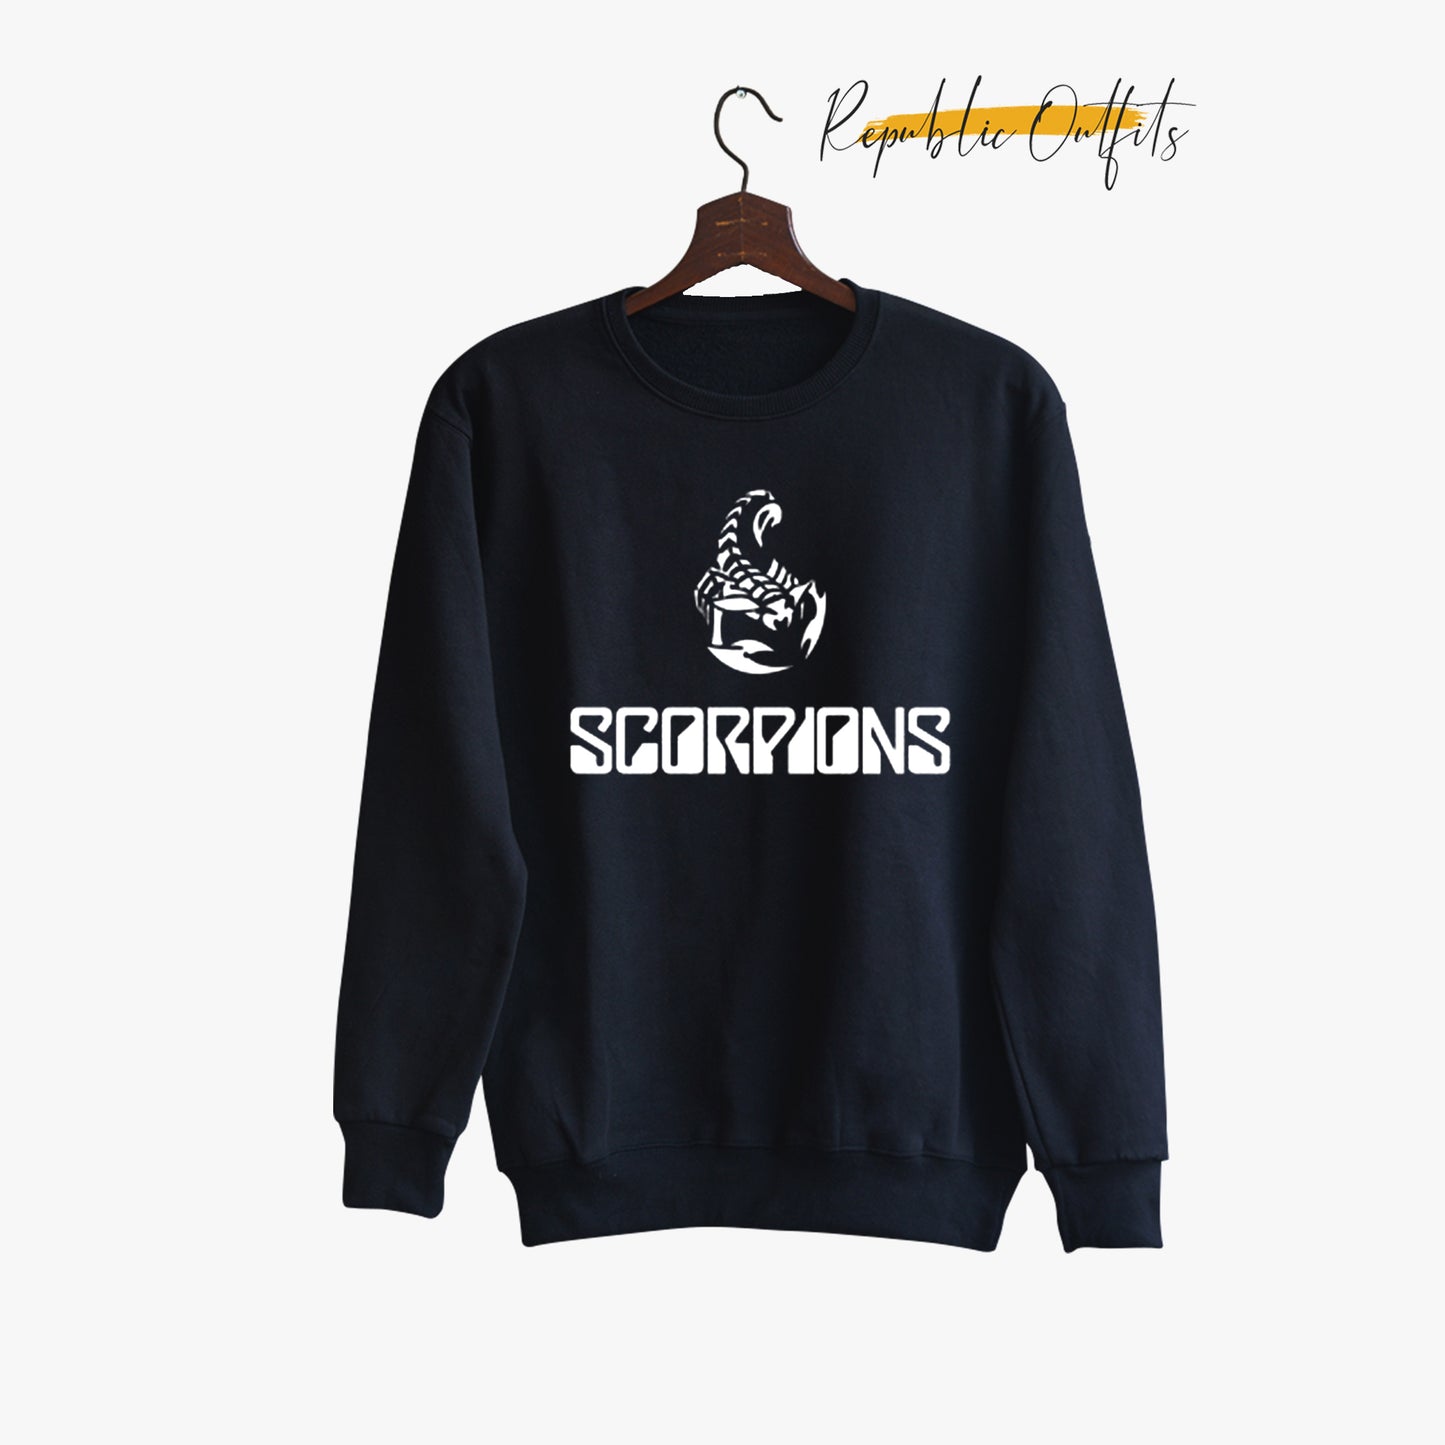 Scorpions Black Sweatshirt